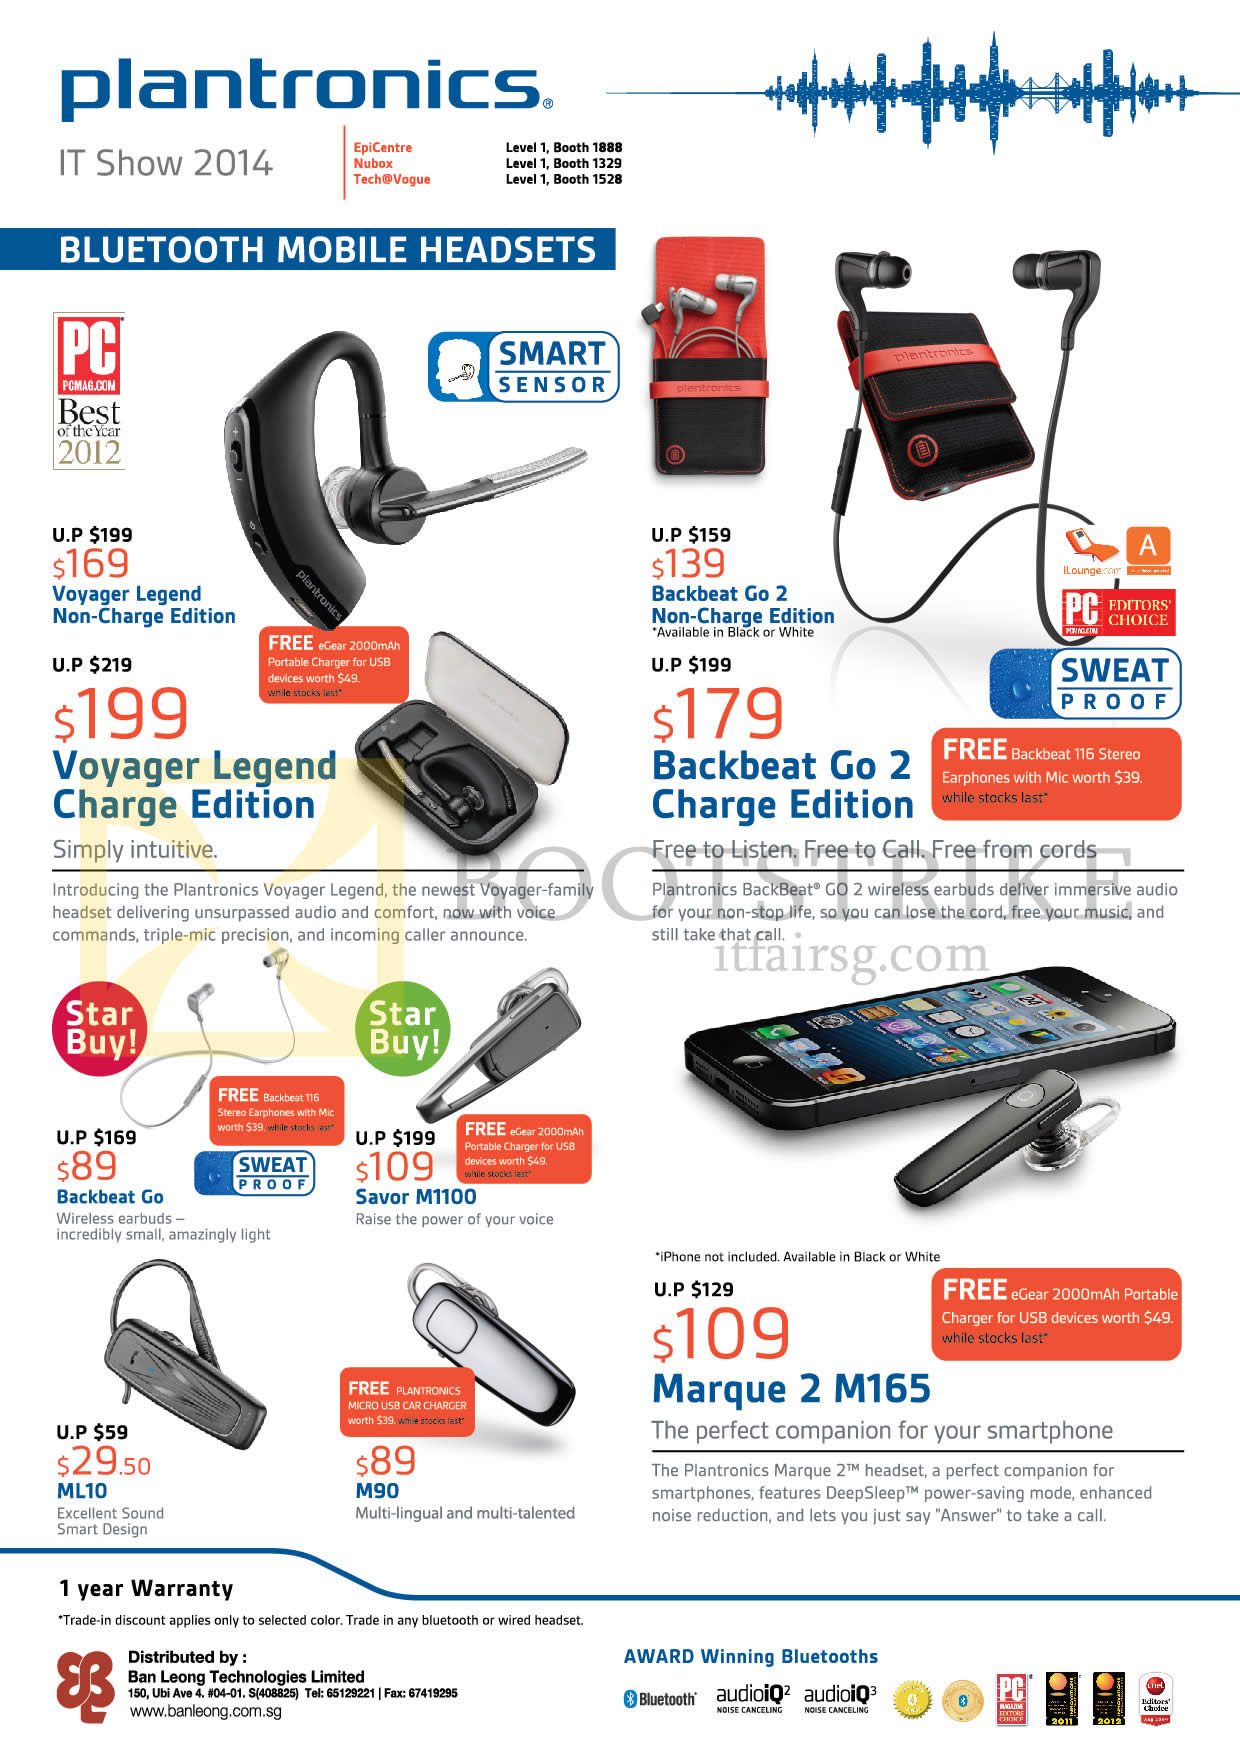 IT SHOW 2014 price list image brochure of Plantronics Prices Bluetooth Mobile Headsets Voyager Legend, Backbeat Go 2, Savor M1100, ML10, M90, Marque 2 M165